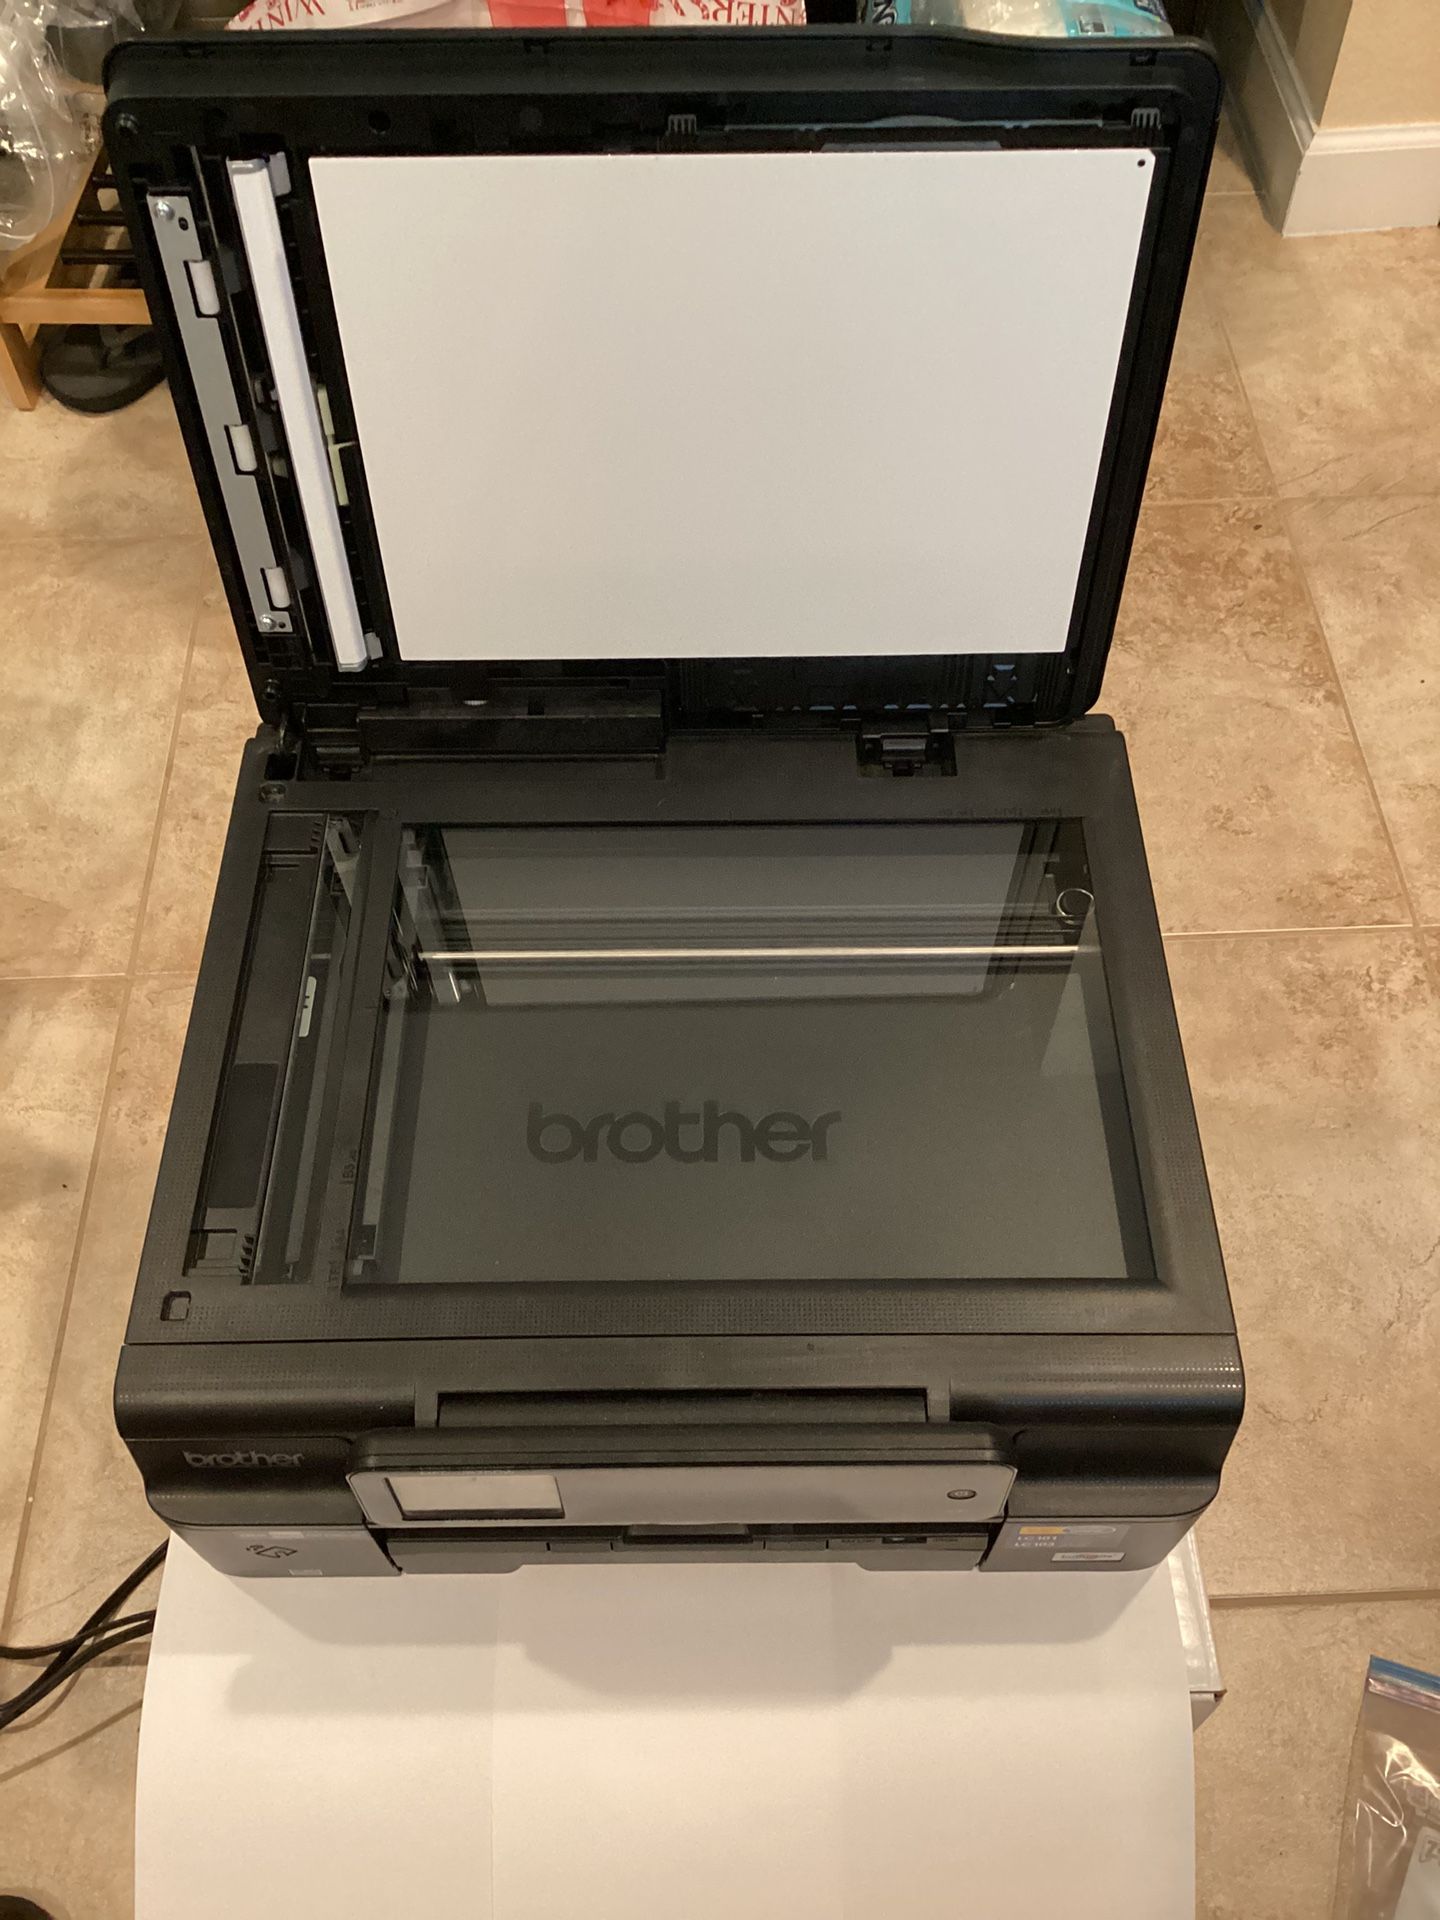 Brother Multifunction Printer/Copier + 5 Brand New Ink Refills!!!!